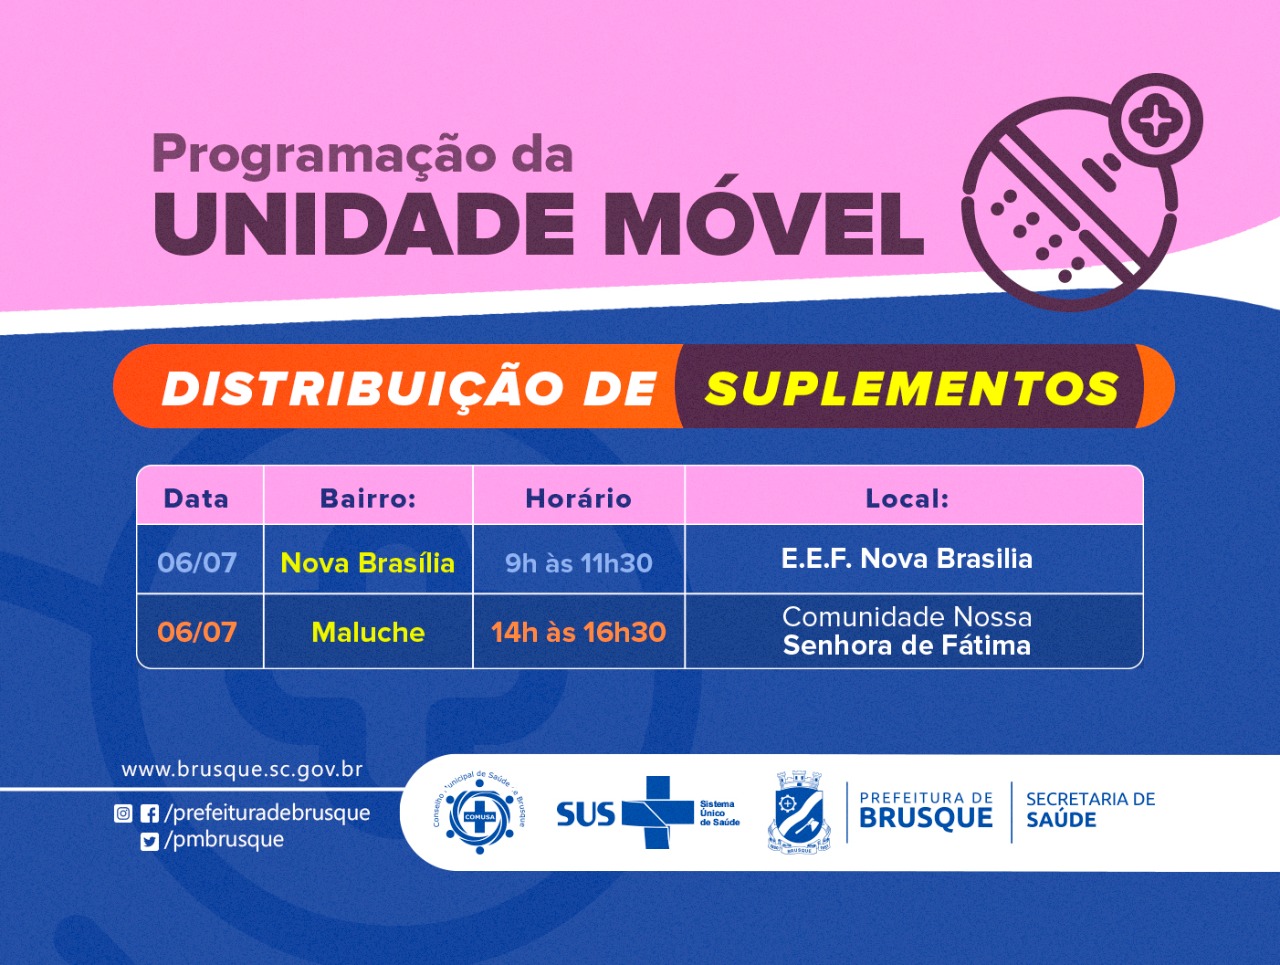 Covid-19: Unidade Móvel distribui suplementos na Nova Brasília e no Maluche nesta terça-feira